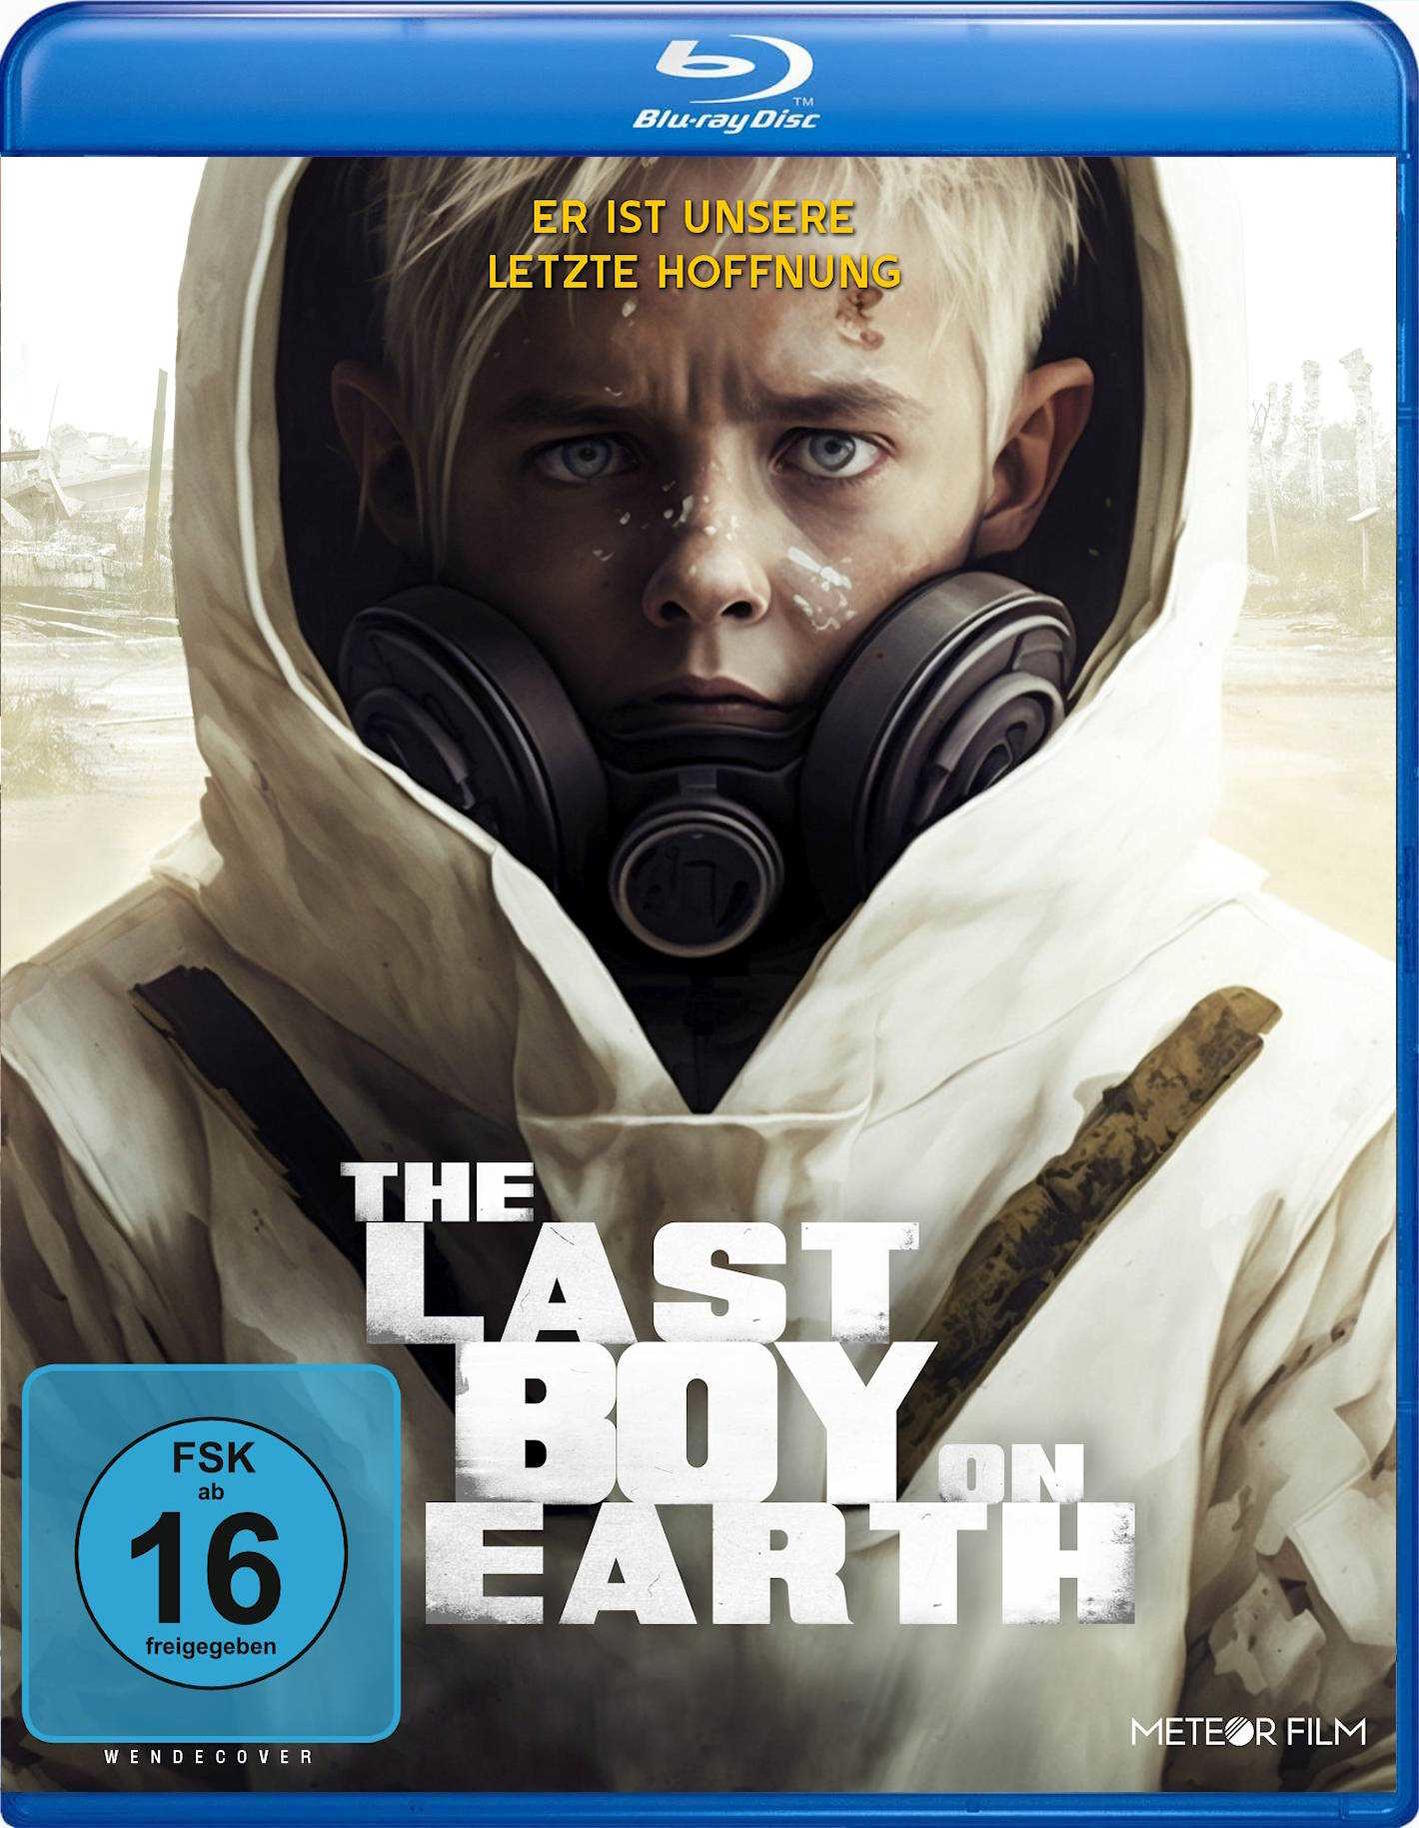 Blu-ray The Earth Boy Last on